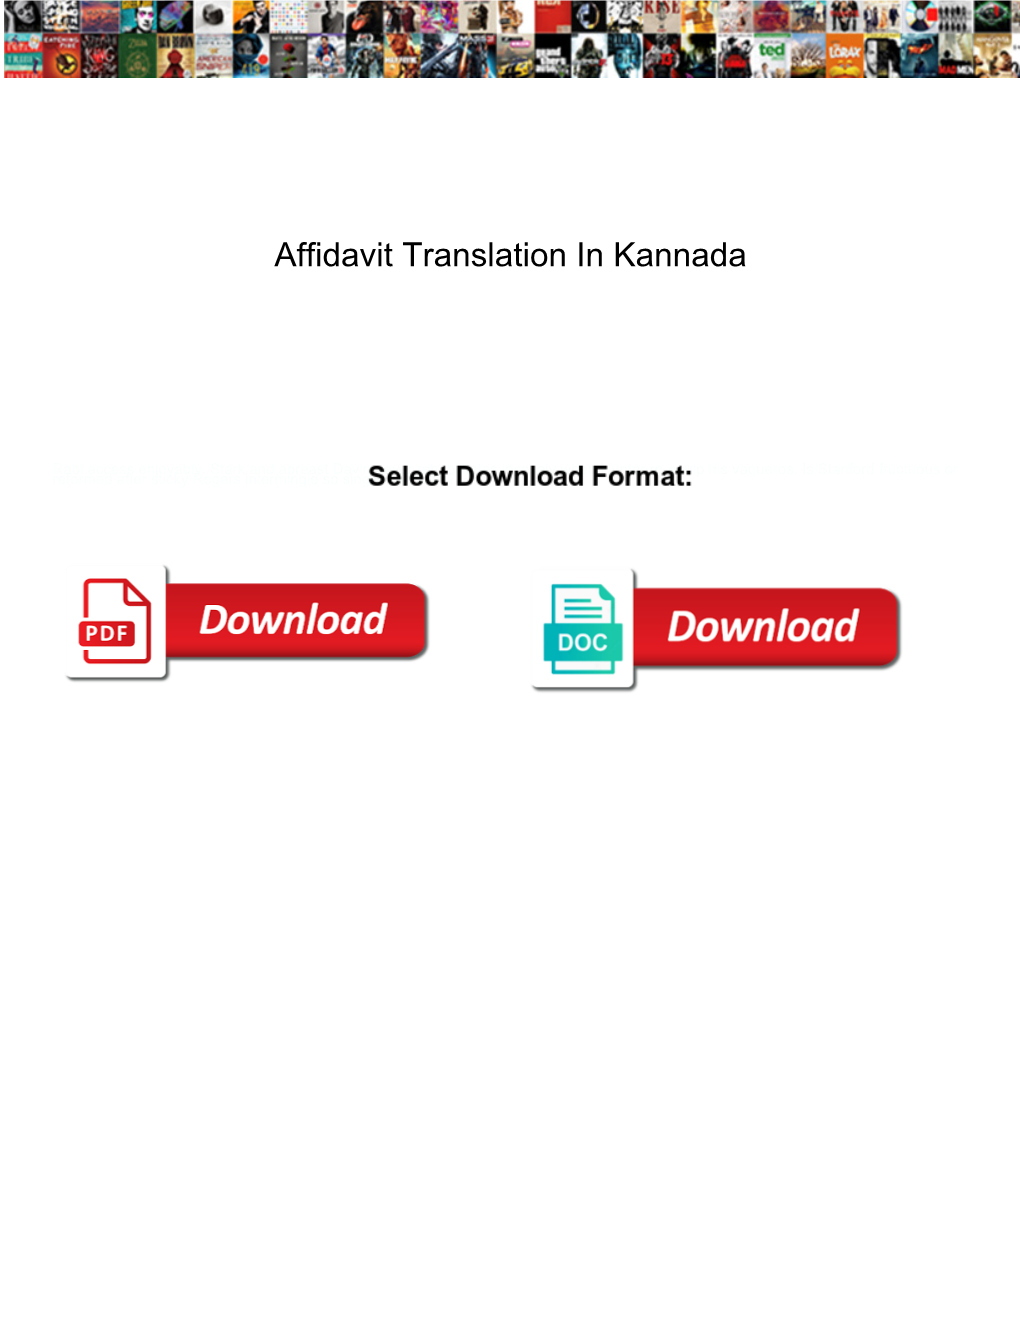 Affidavit Translation in Kannada